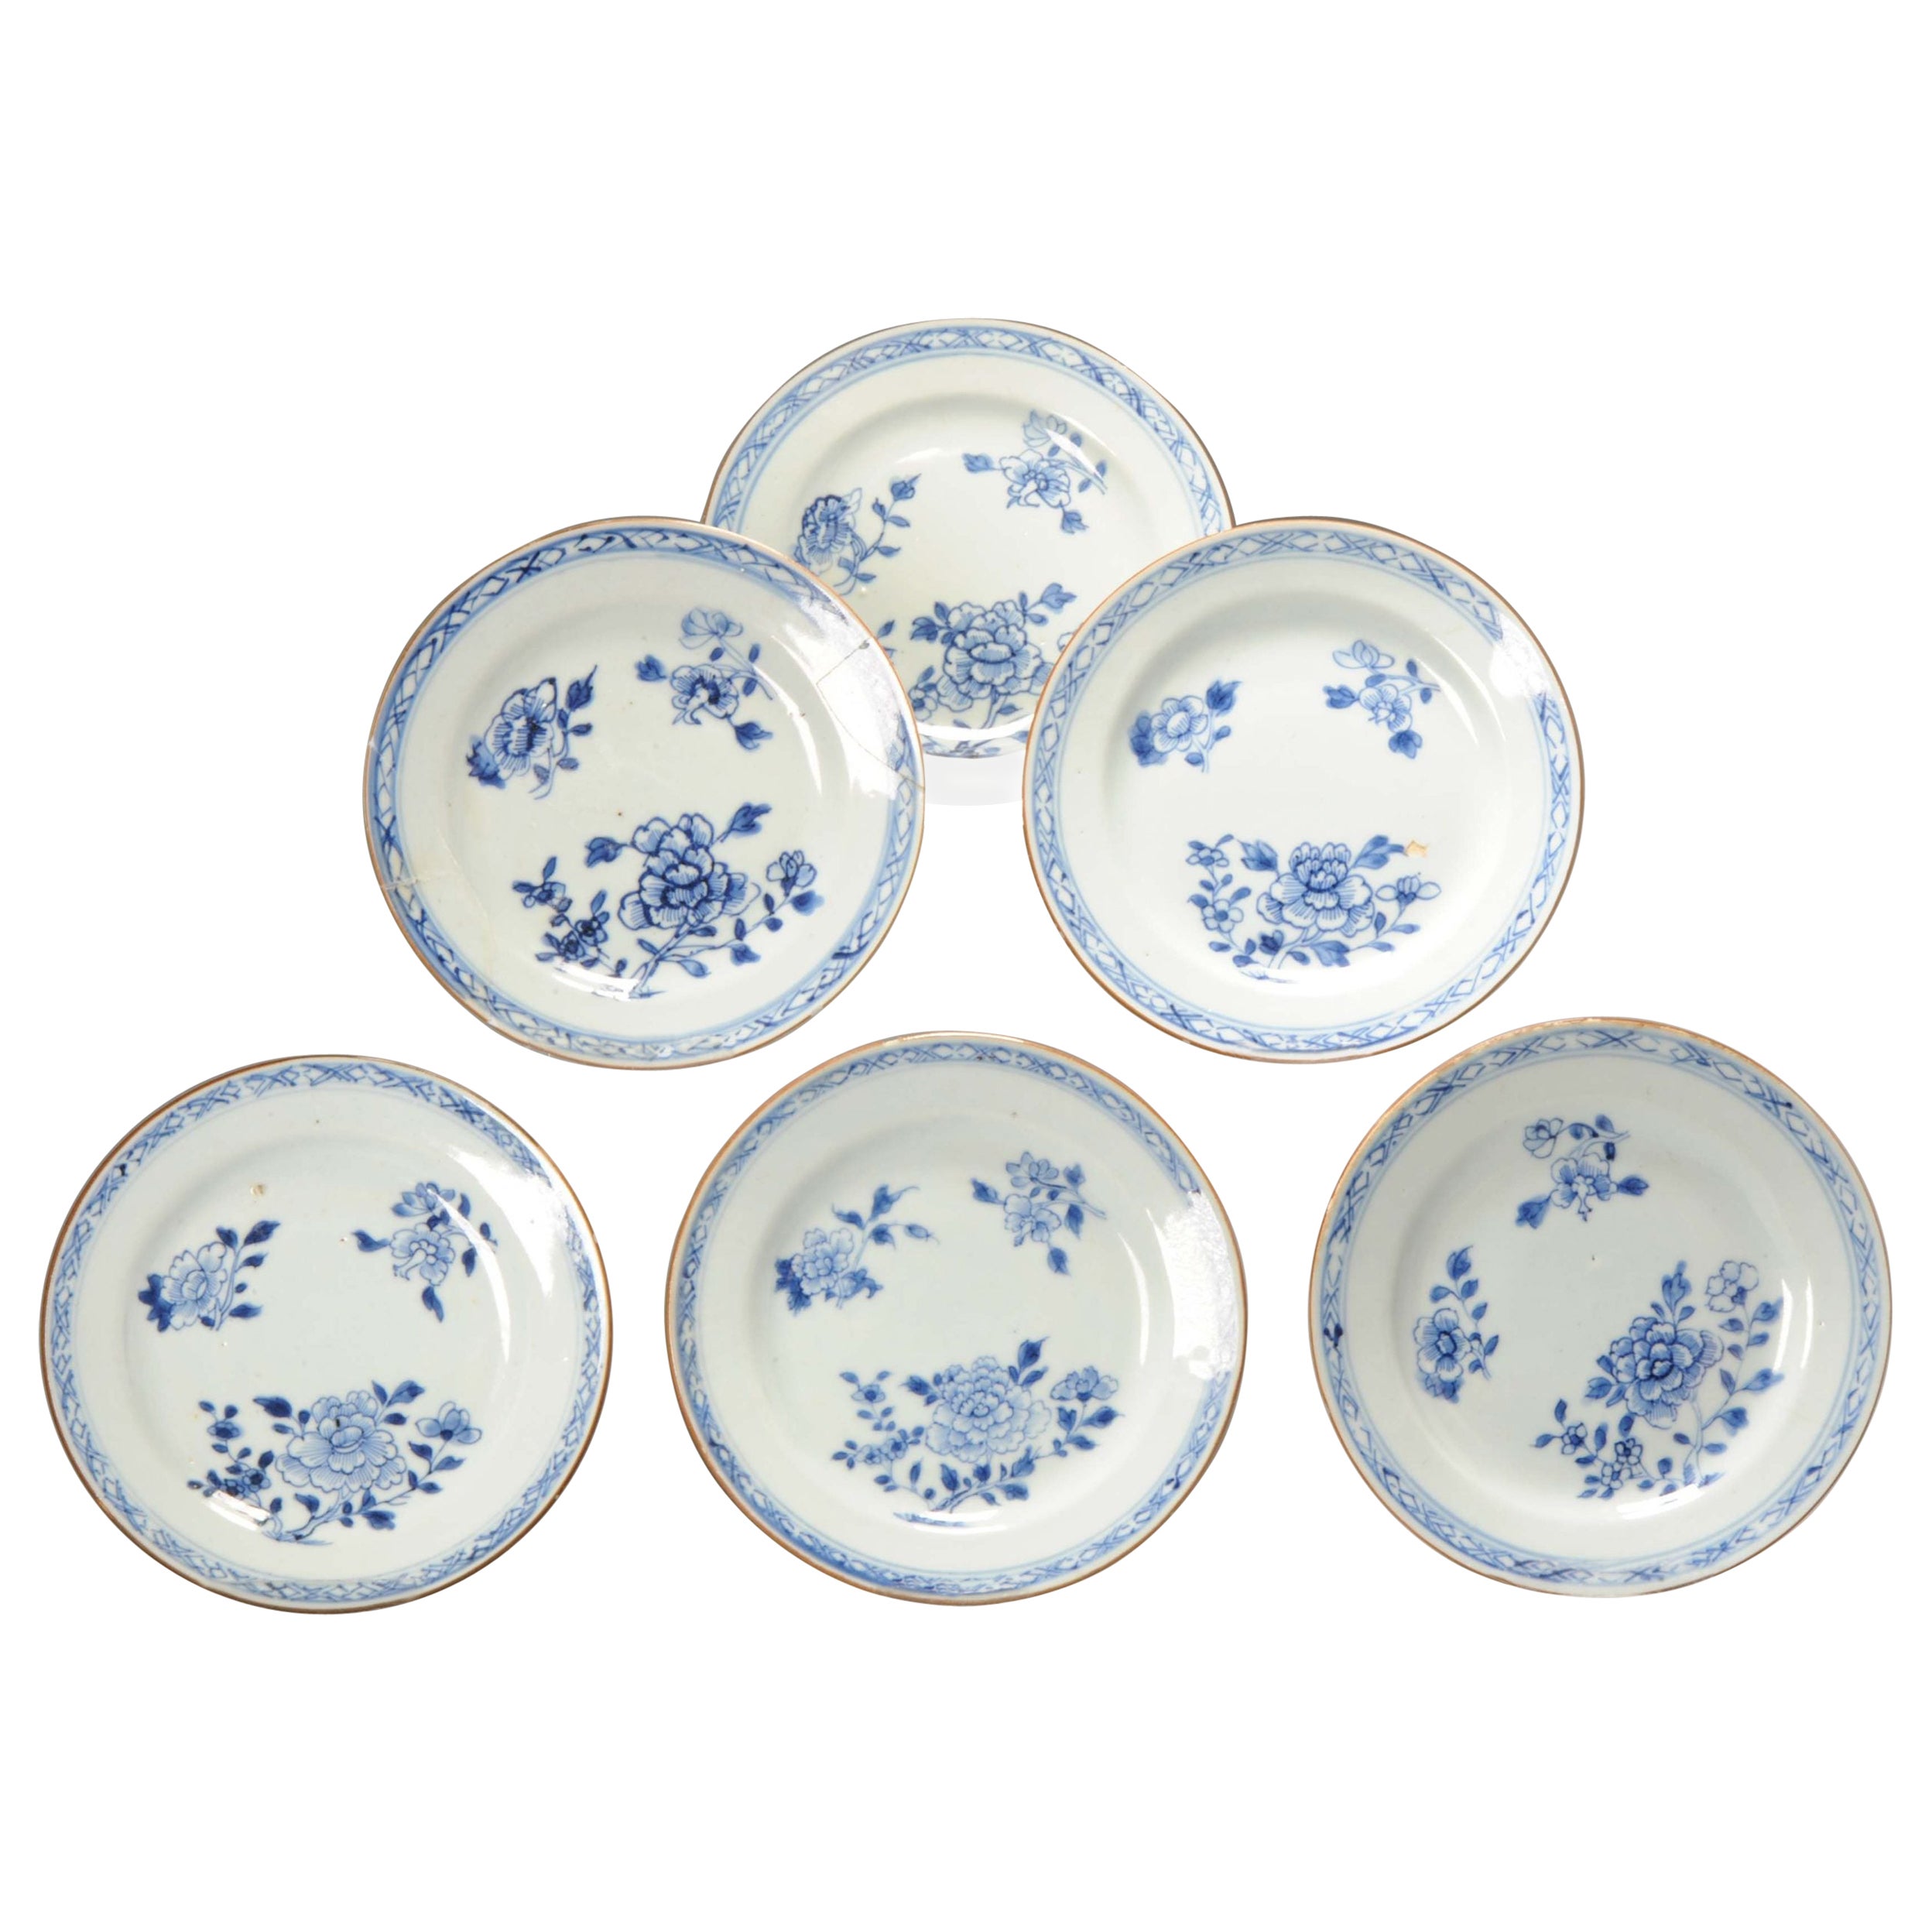 Set of 6 Antique Chinese Porcelain Blue White Porridge Dinner Plates, 18th Cent For Sale